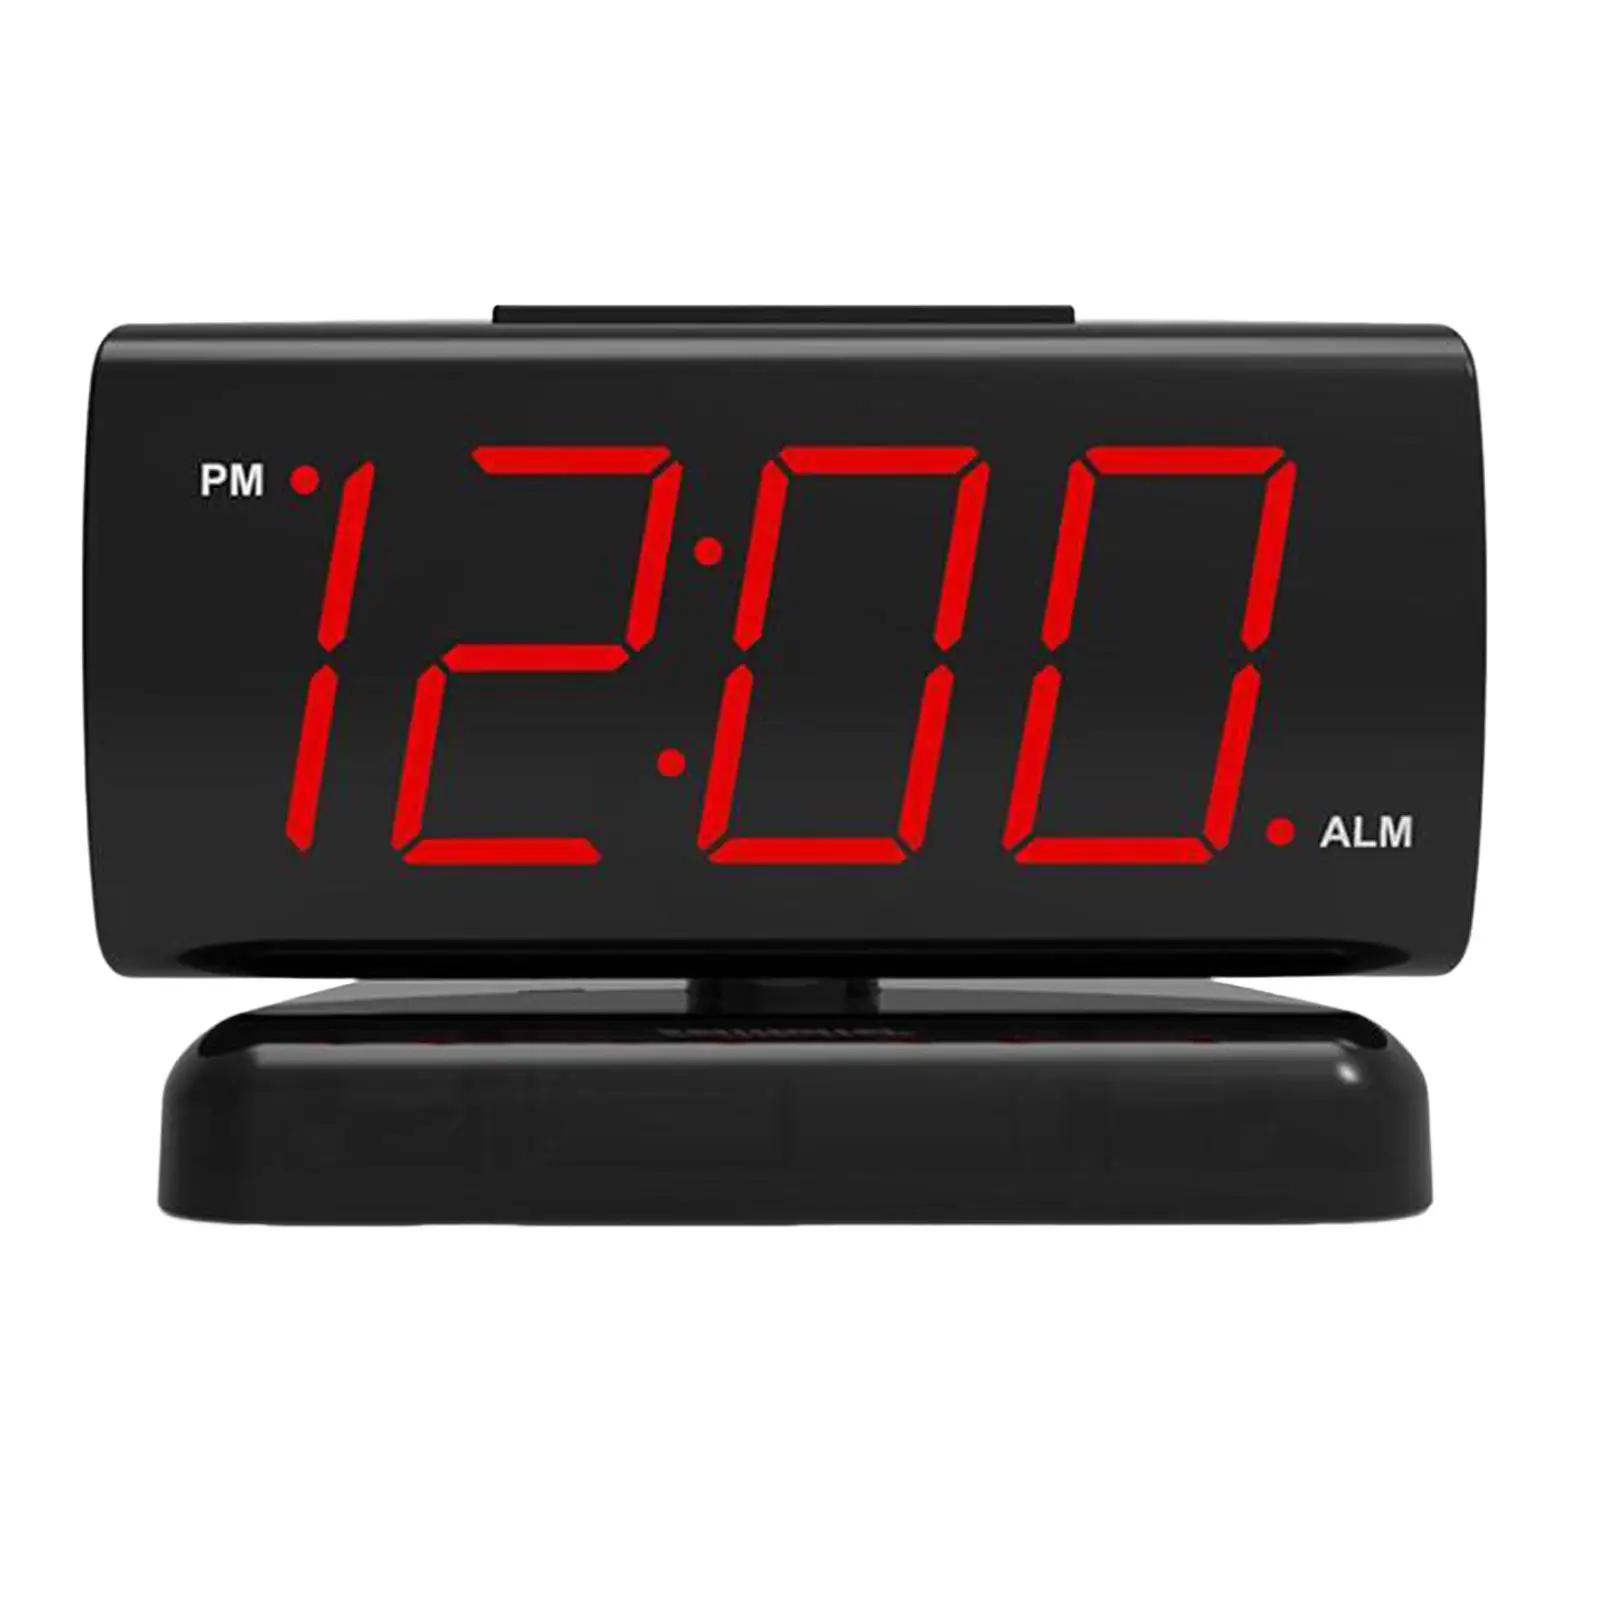 Desk LED Clock Dimmable 12H Display Digital Alarm Clock for Bedroom Festival